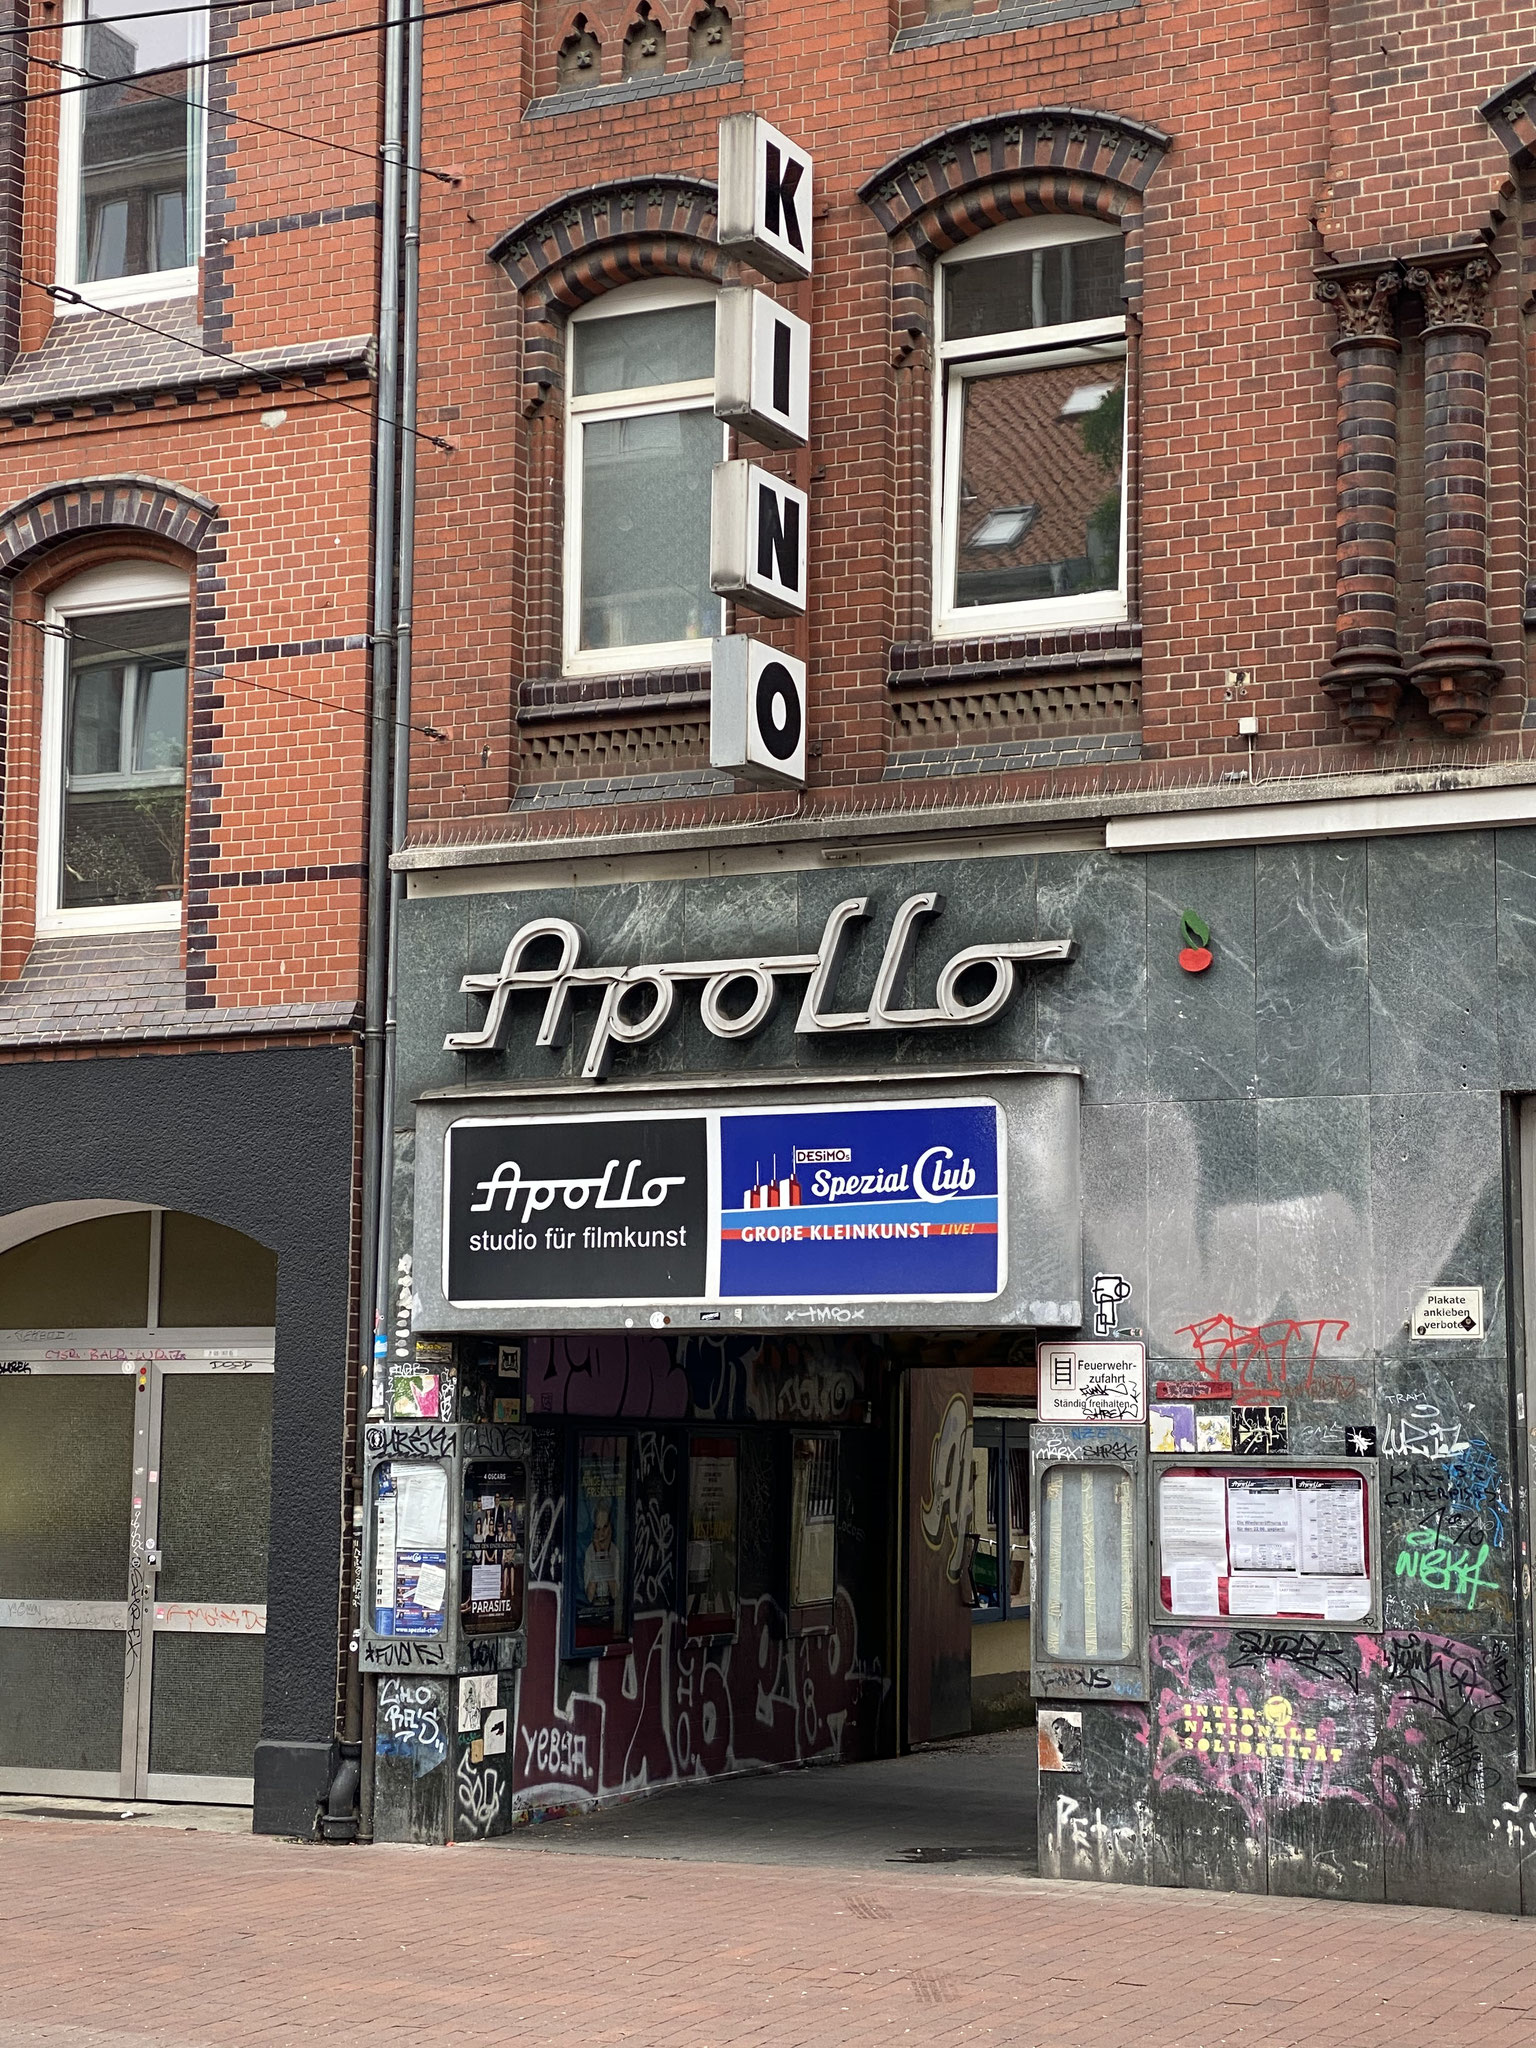 Apollo Kino